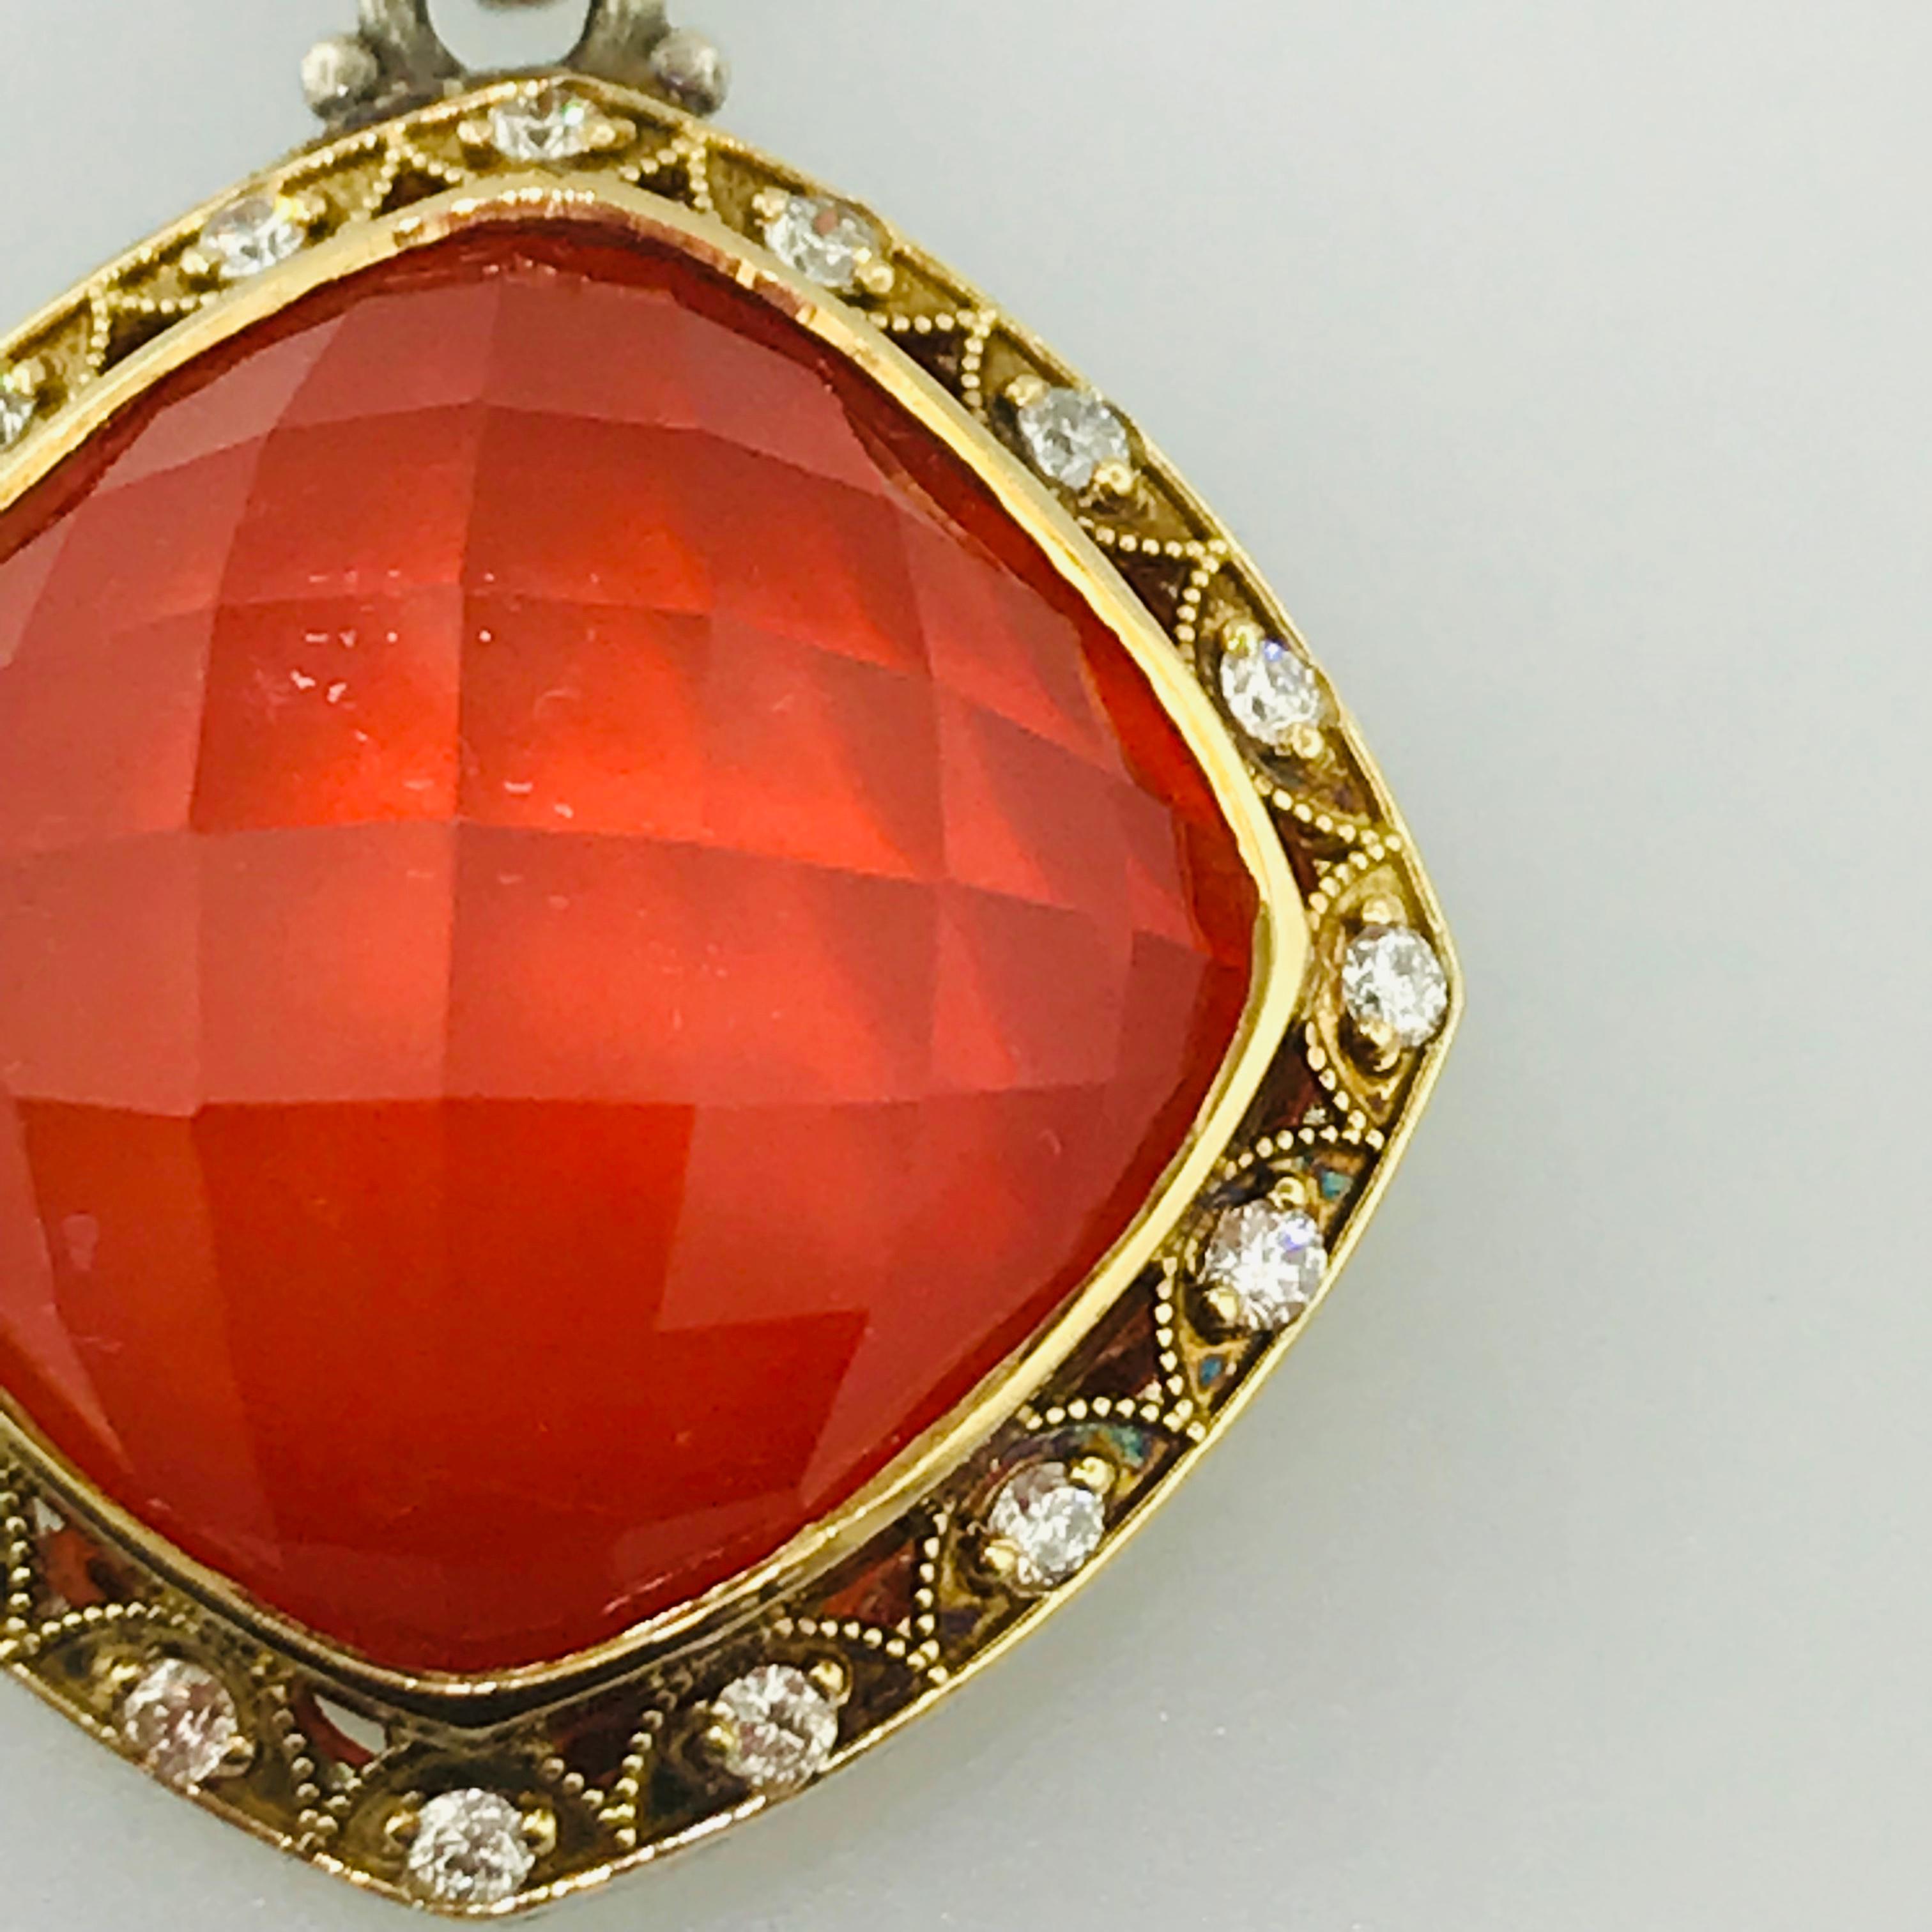 This Tacori diamond & red onyx and quartz pendant enhancer is a Tacori original. The pendant comes with a Tacori jewelry pouch, the Tacori 18K 925 